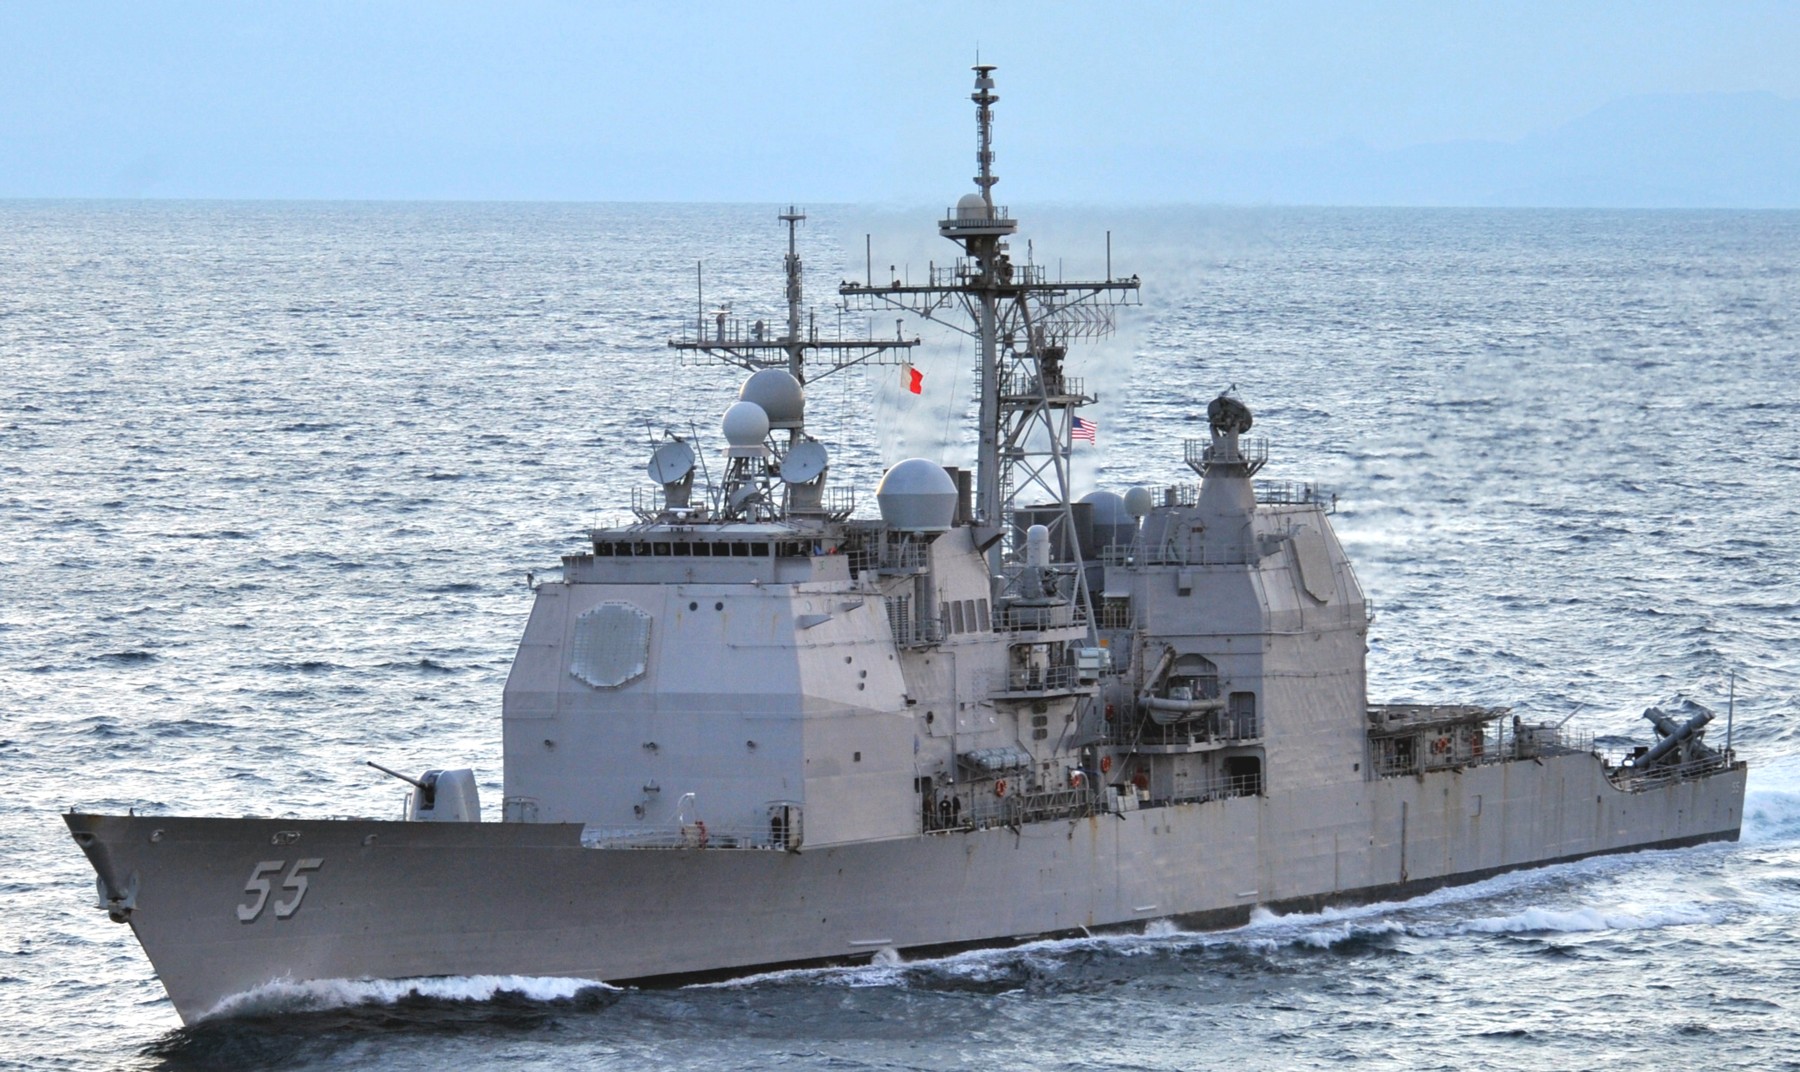 cg-55 uss leyte gulf ticonderoga class guided missile cruiser aegis us navy strait of gibraltar 34